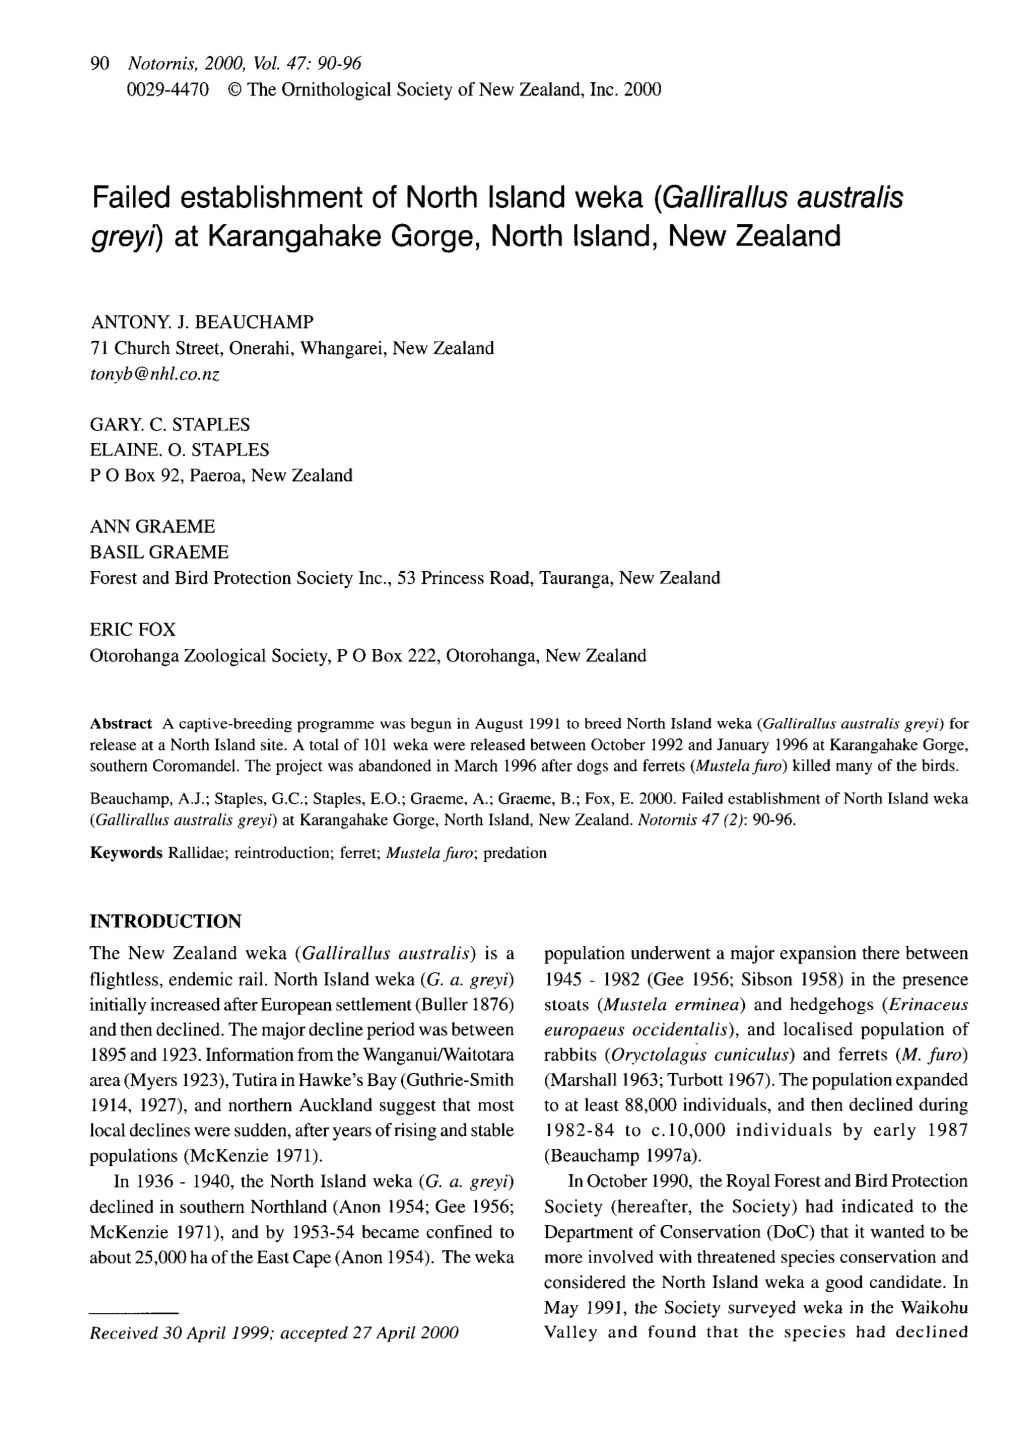 Failed Establishment of North Island Weka (Gallirallus Australis Grey11 at Karangahake Gorge, North Island, New Zealand